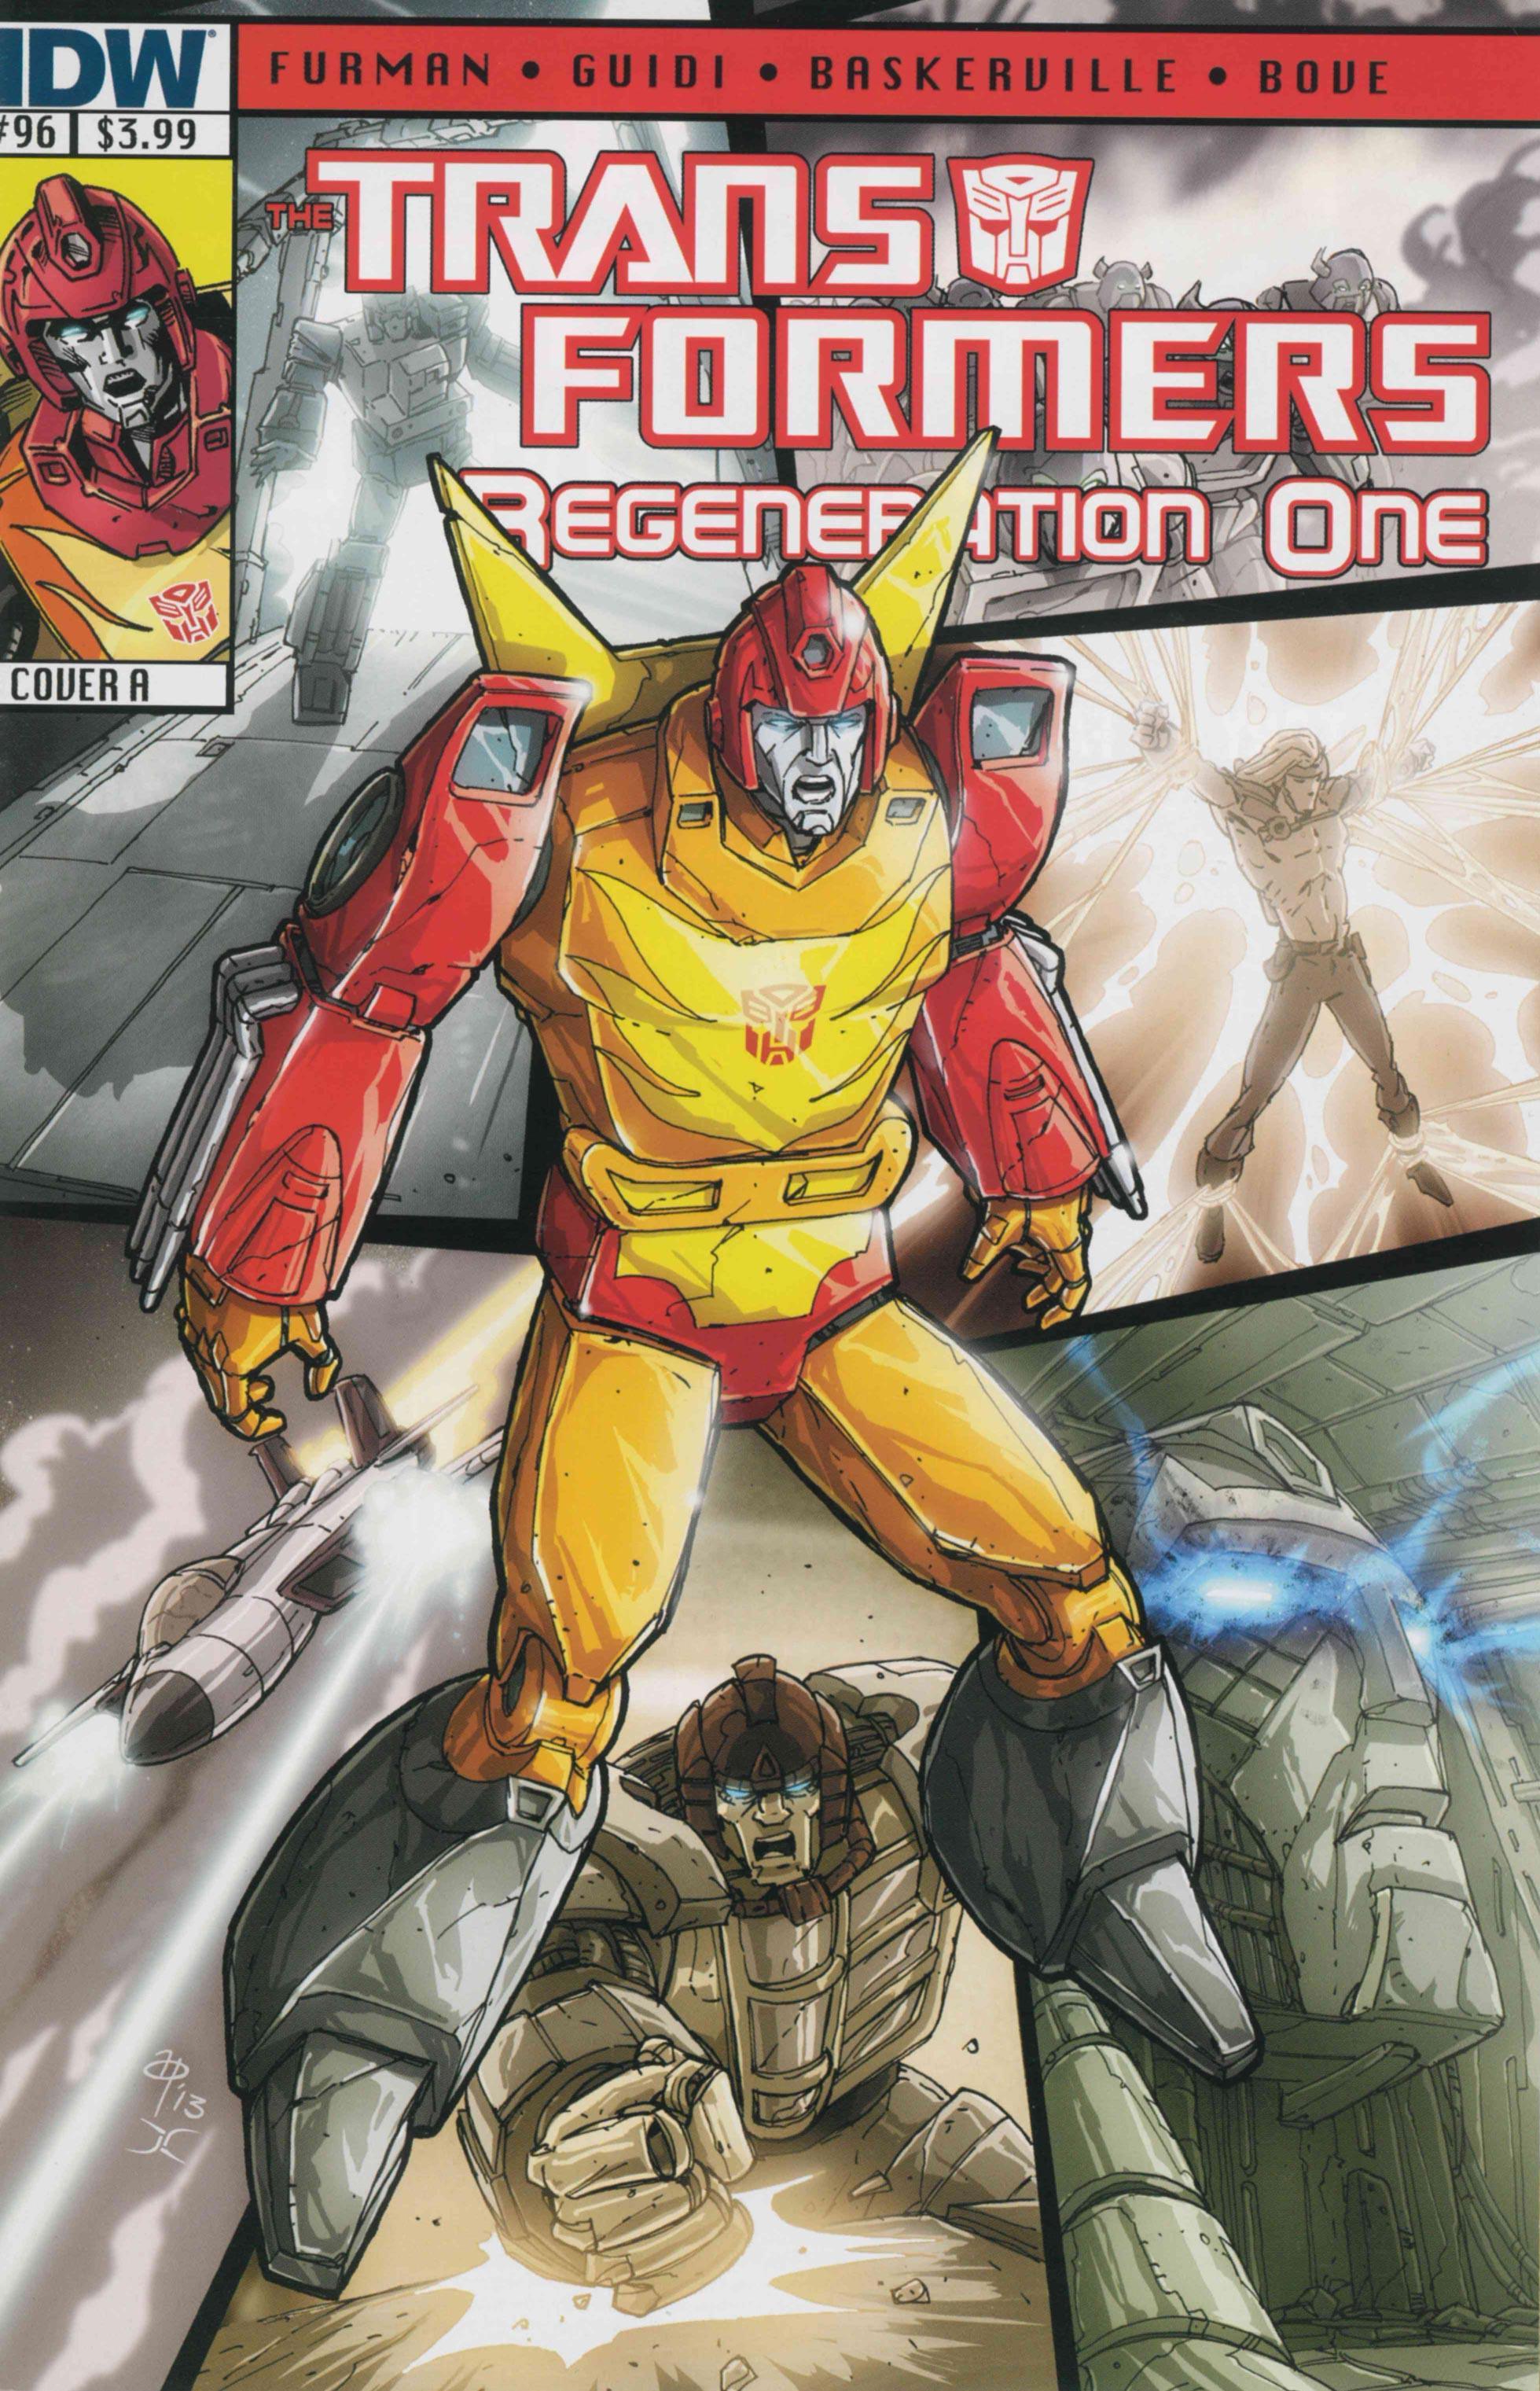 TRANSFORMERS REGENERATION ONE #96 CVR A - Kings Comics